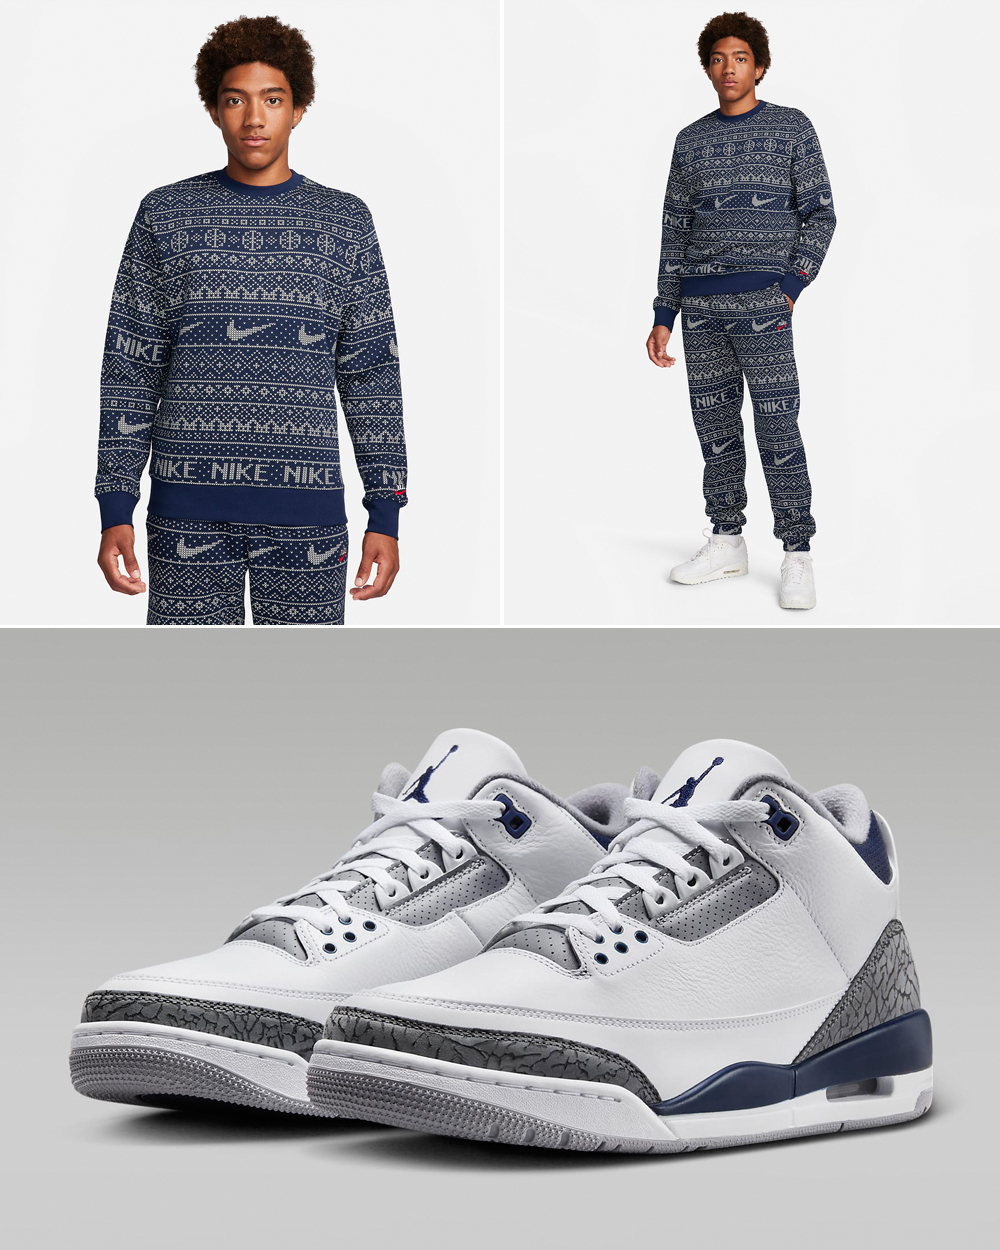 Air-Jordan-3-Midnight-Navy-Nike-Clothing